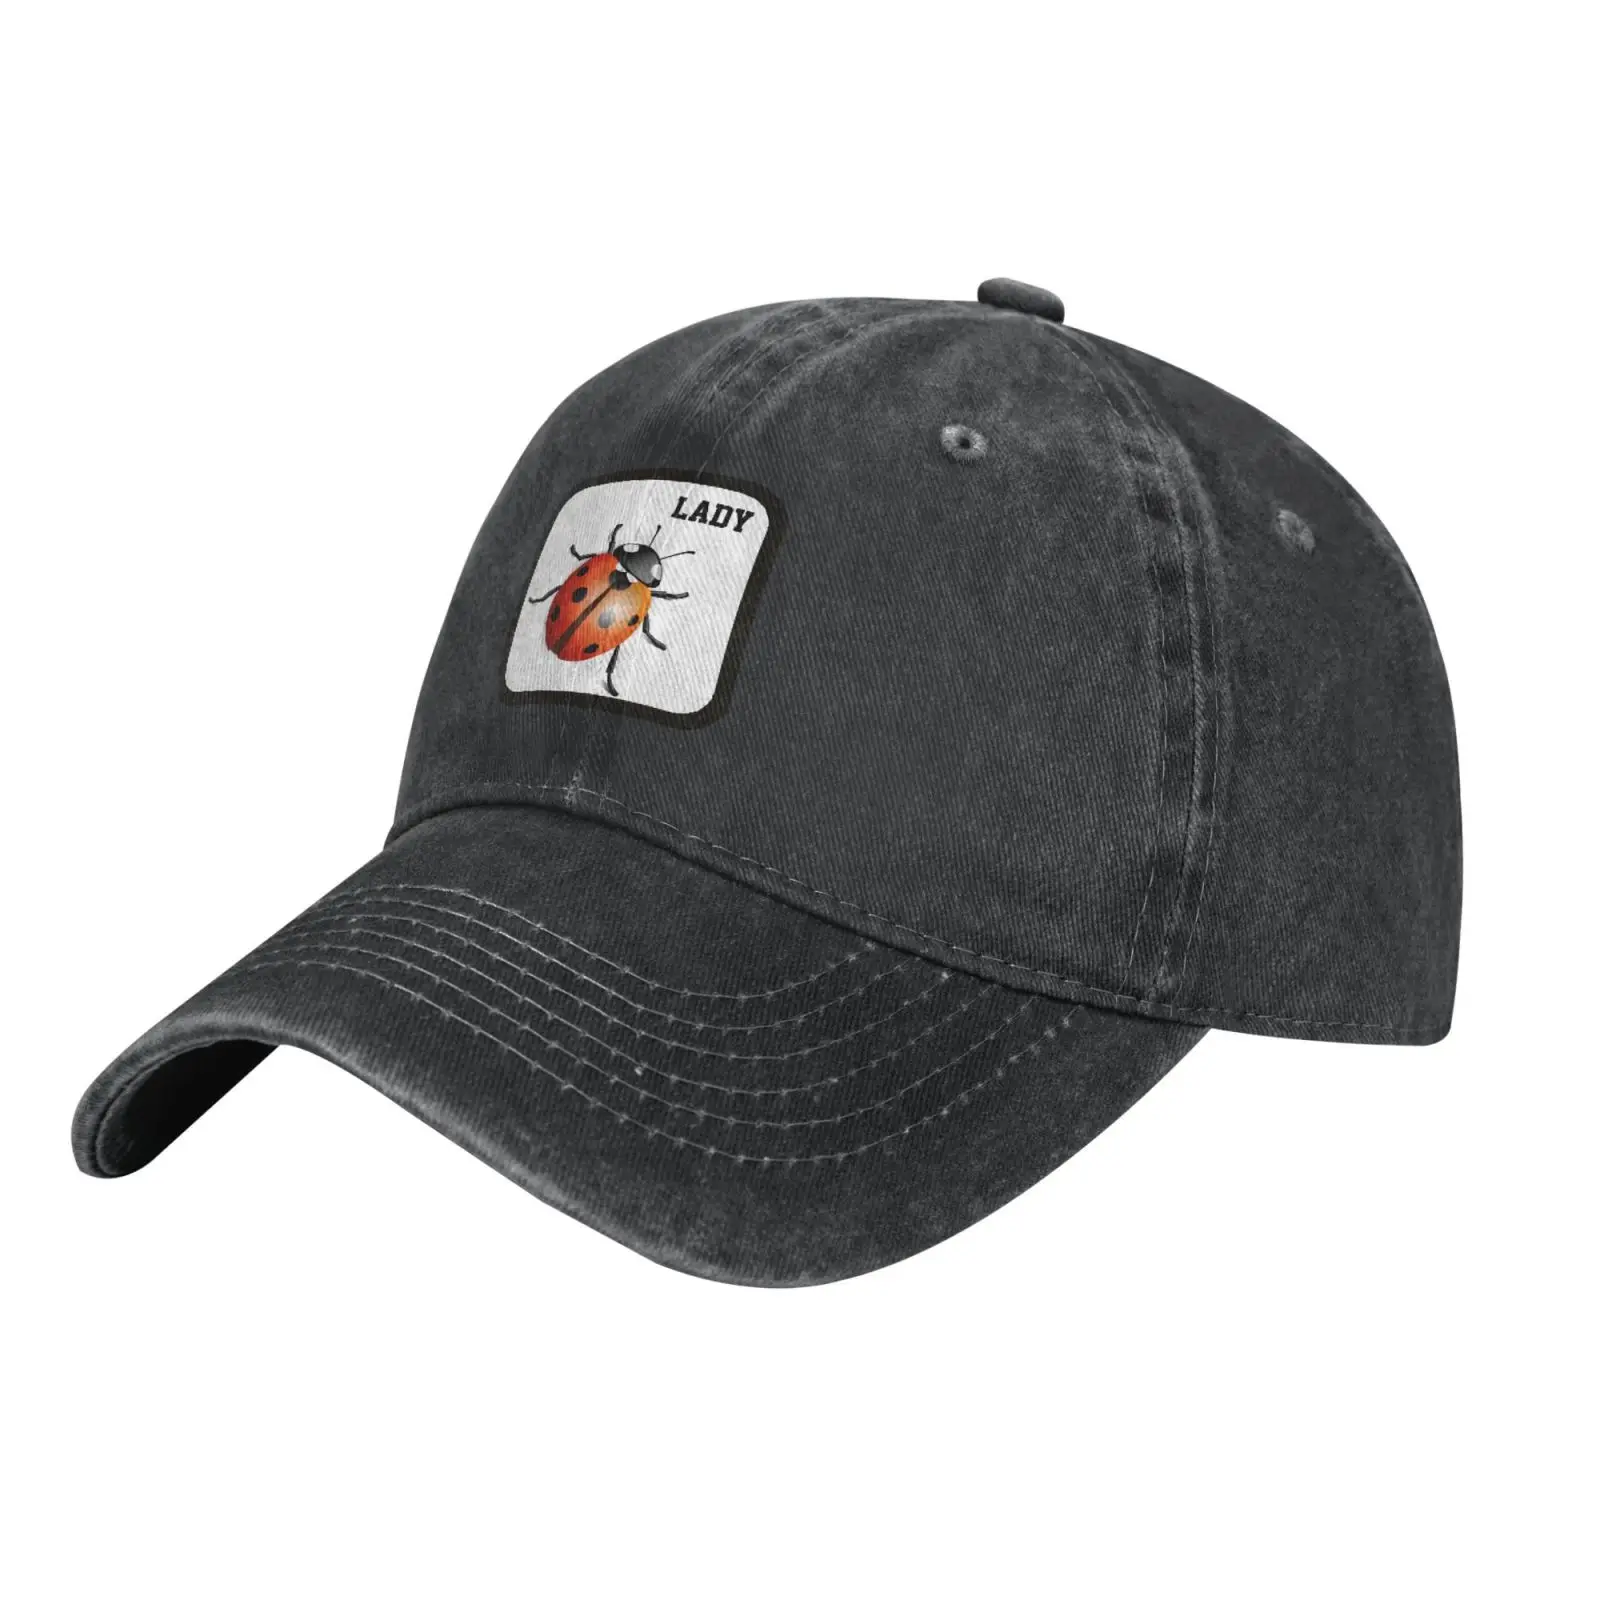 Ladybug Cotton Unstructured Dad Hat Baseball SnapBack Cap for Men Women Teens